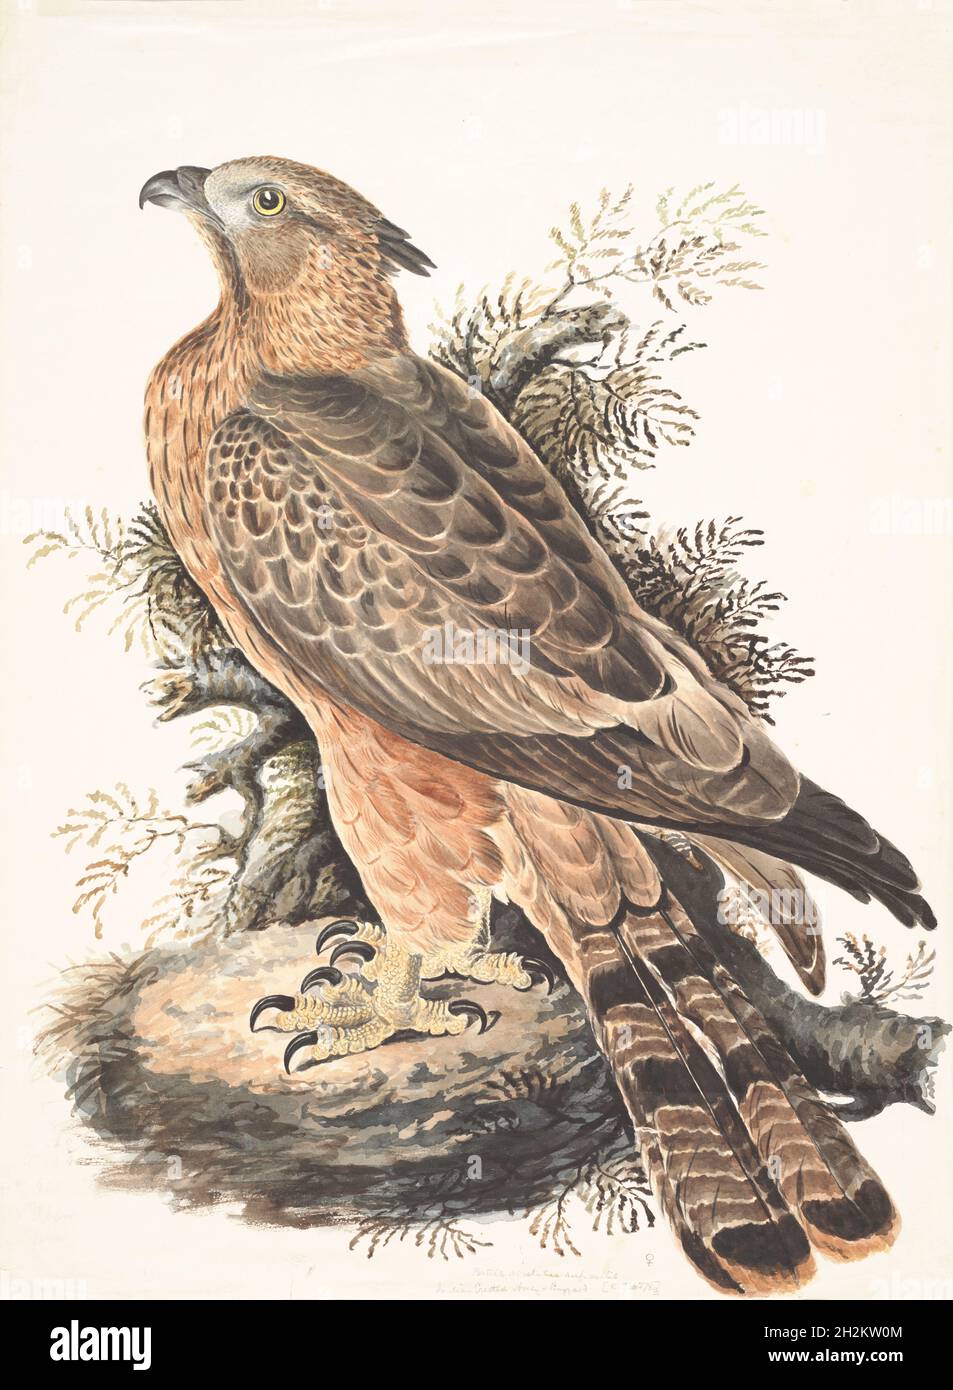 Crested honey buzzard, 18th century illustration Stock Photo